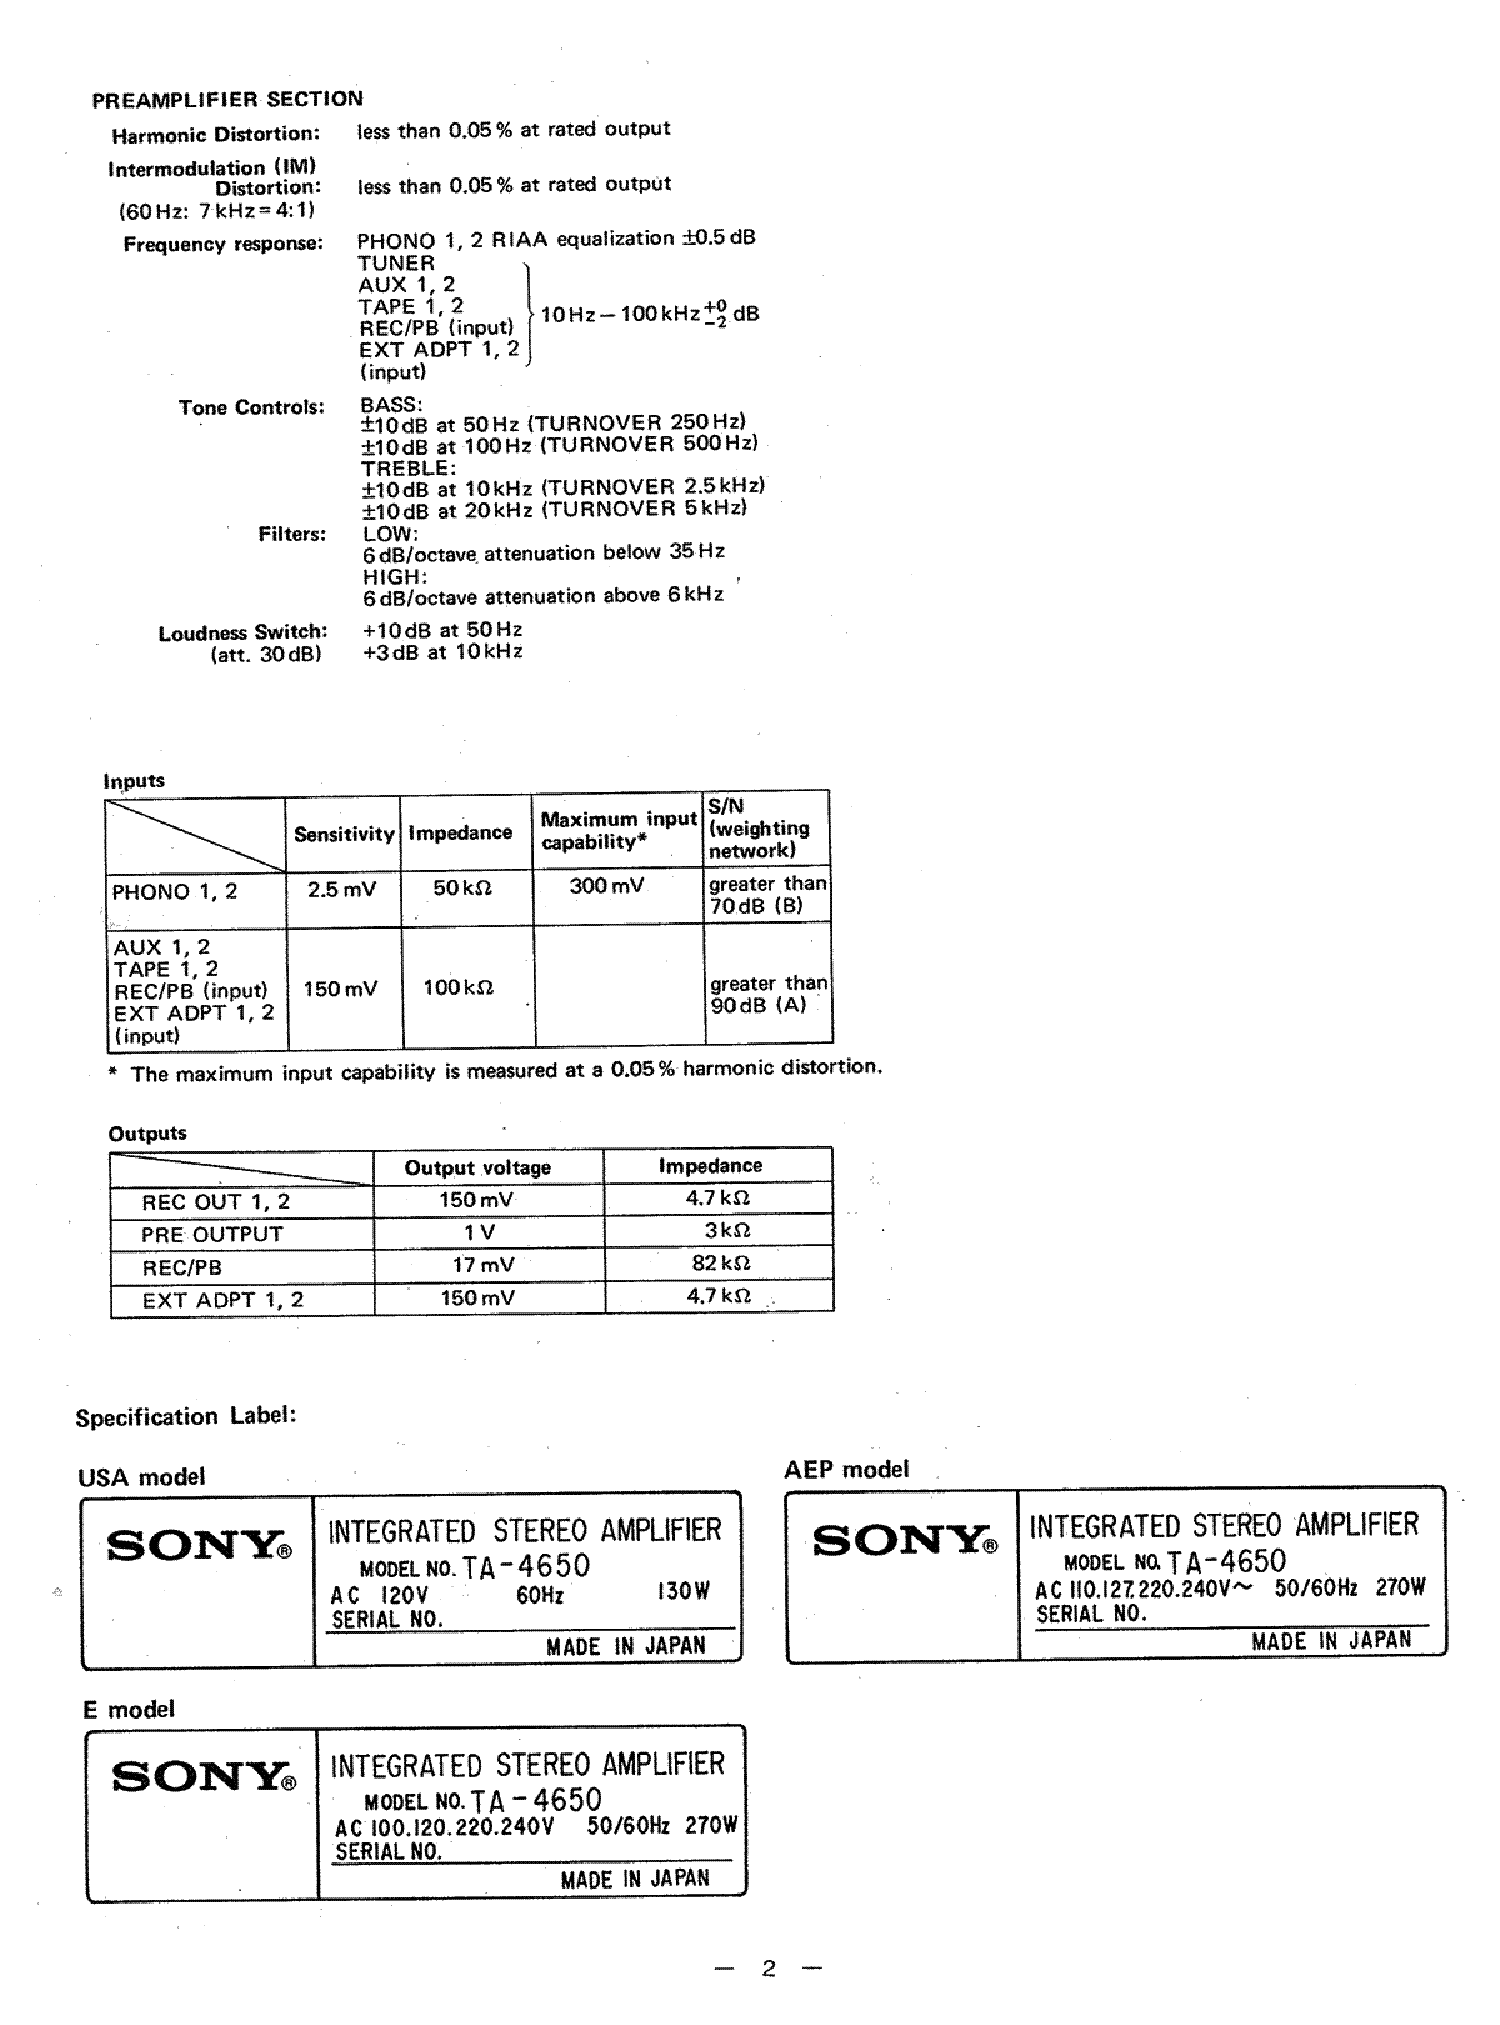 SONY TA-4650 SM service manual (2nd page)